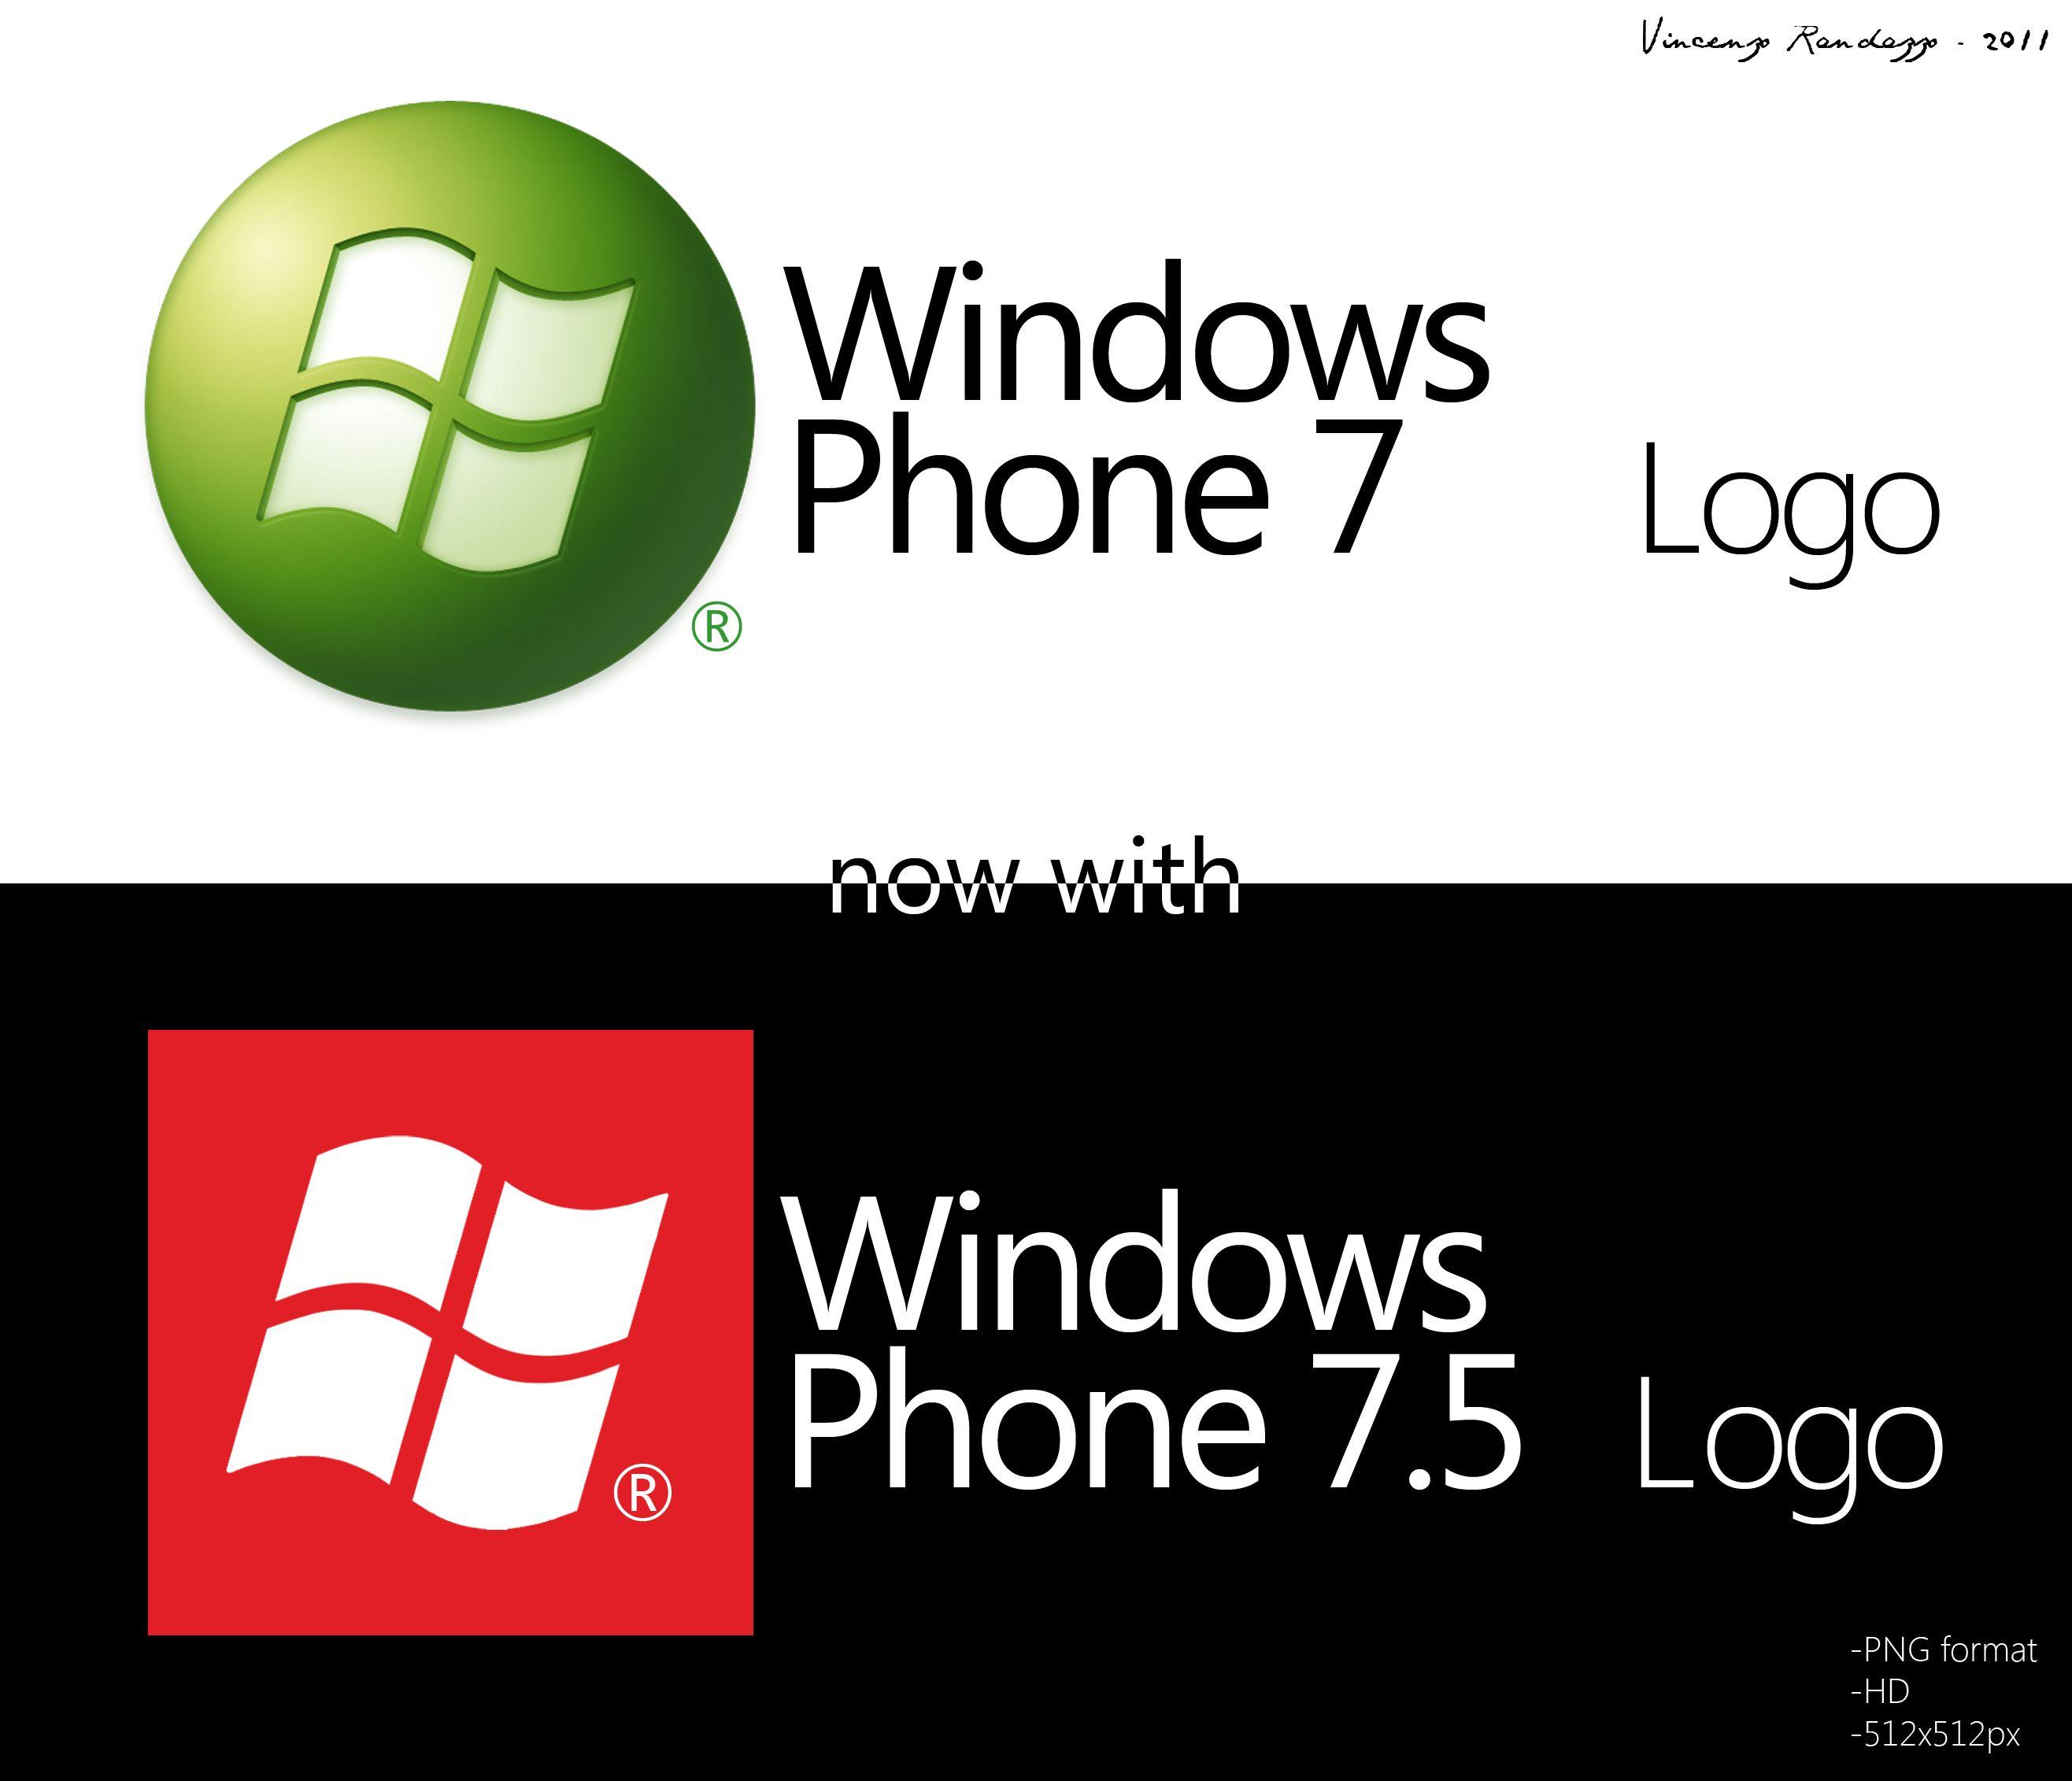 Windows Phone 7 Logo - Windows Phone 7 Logos HD by metrovinz on DeviantArt